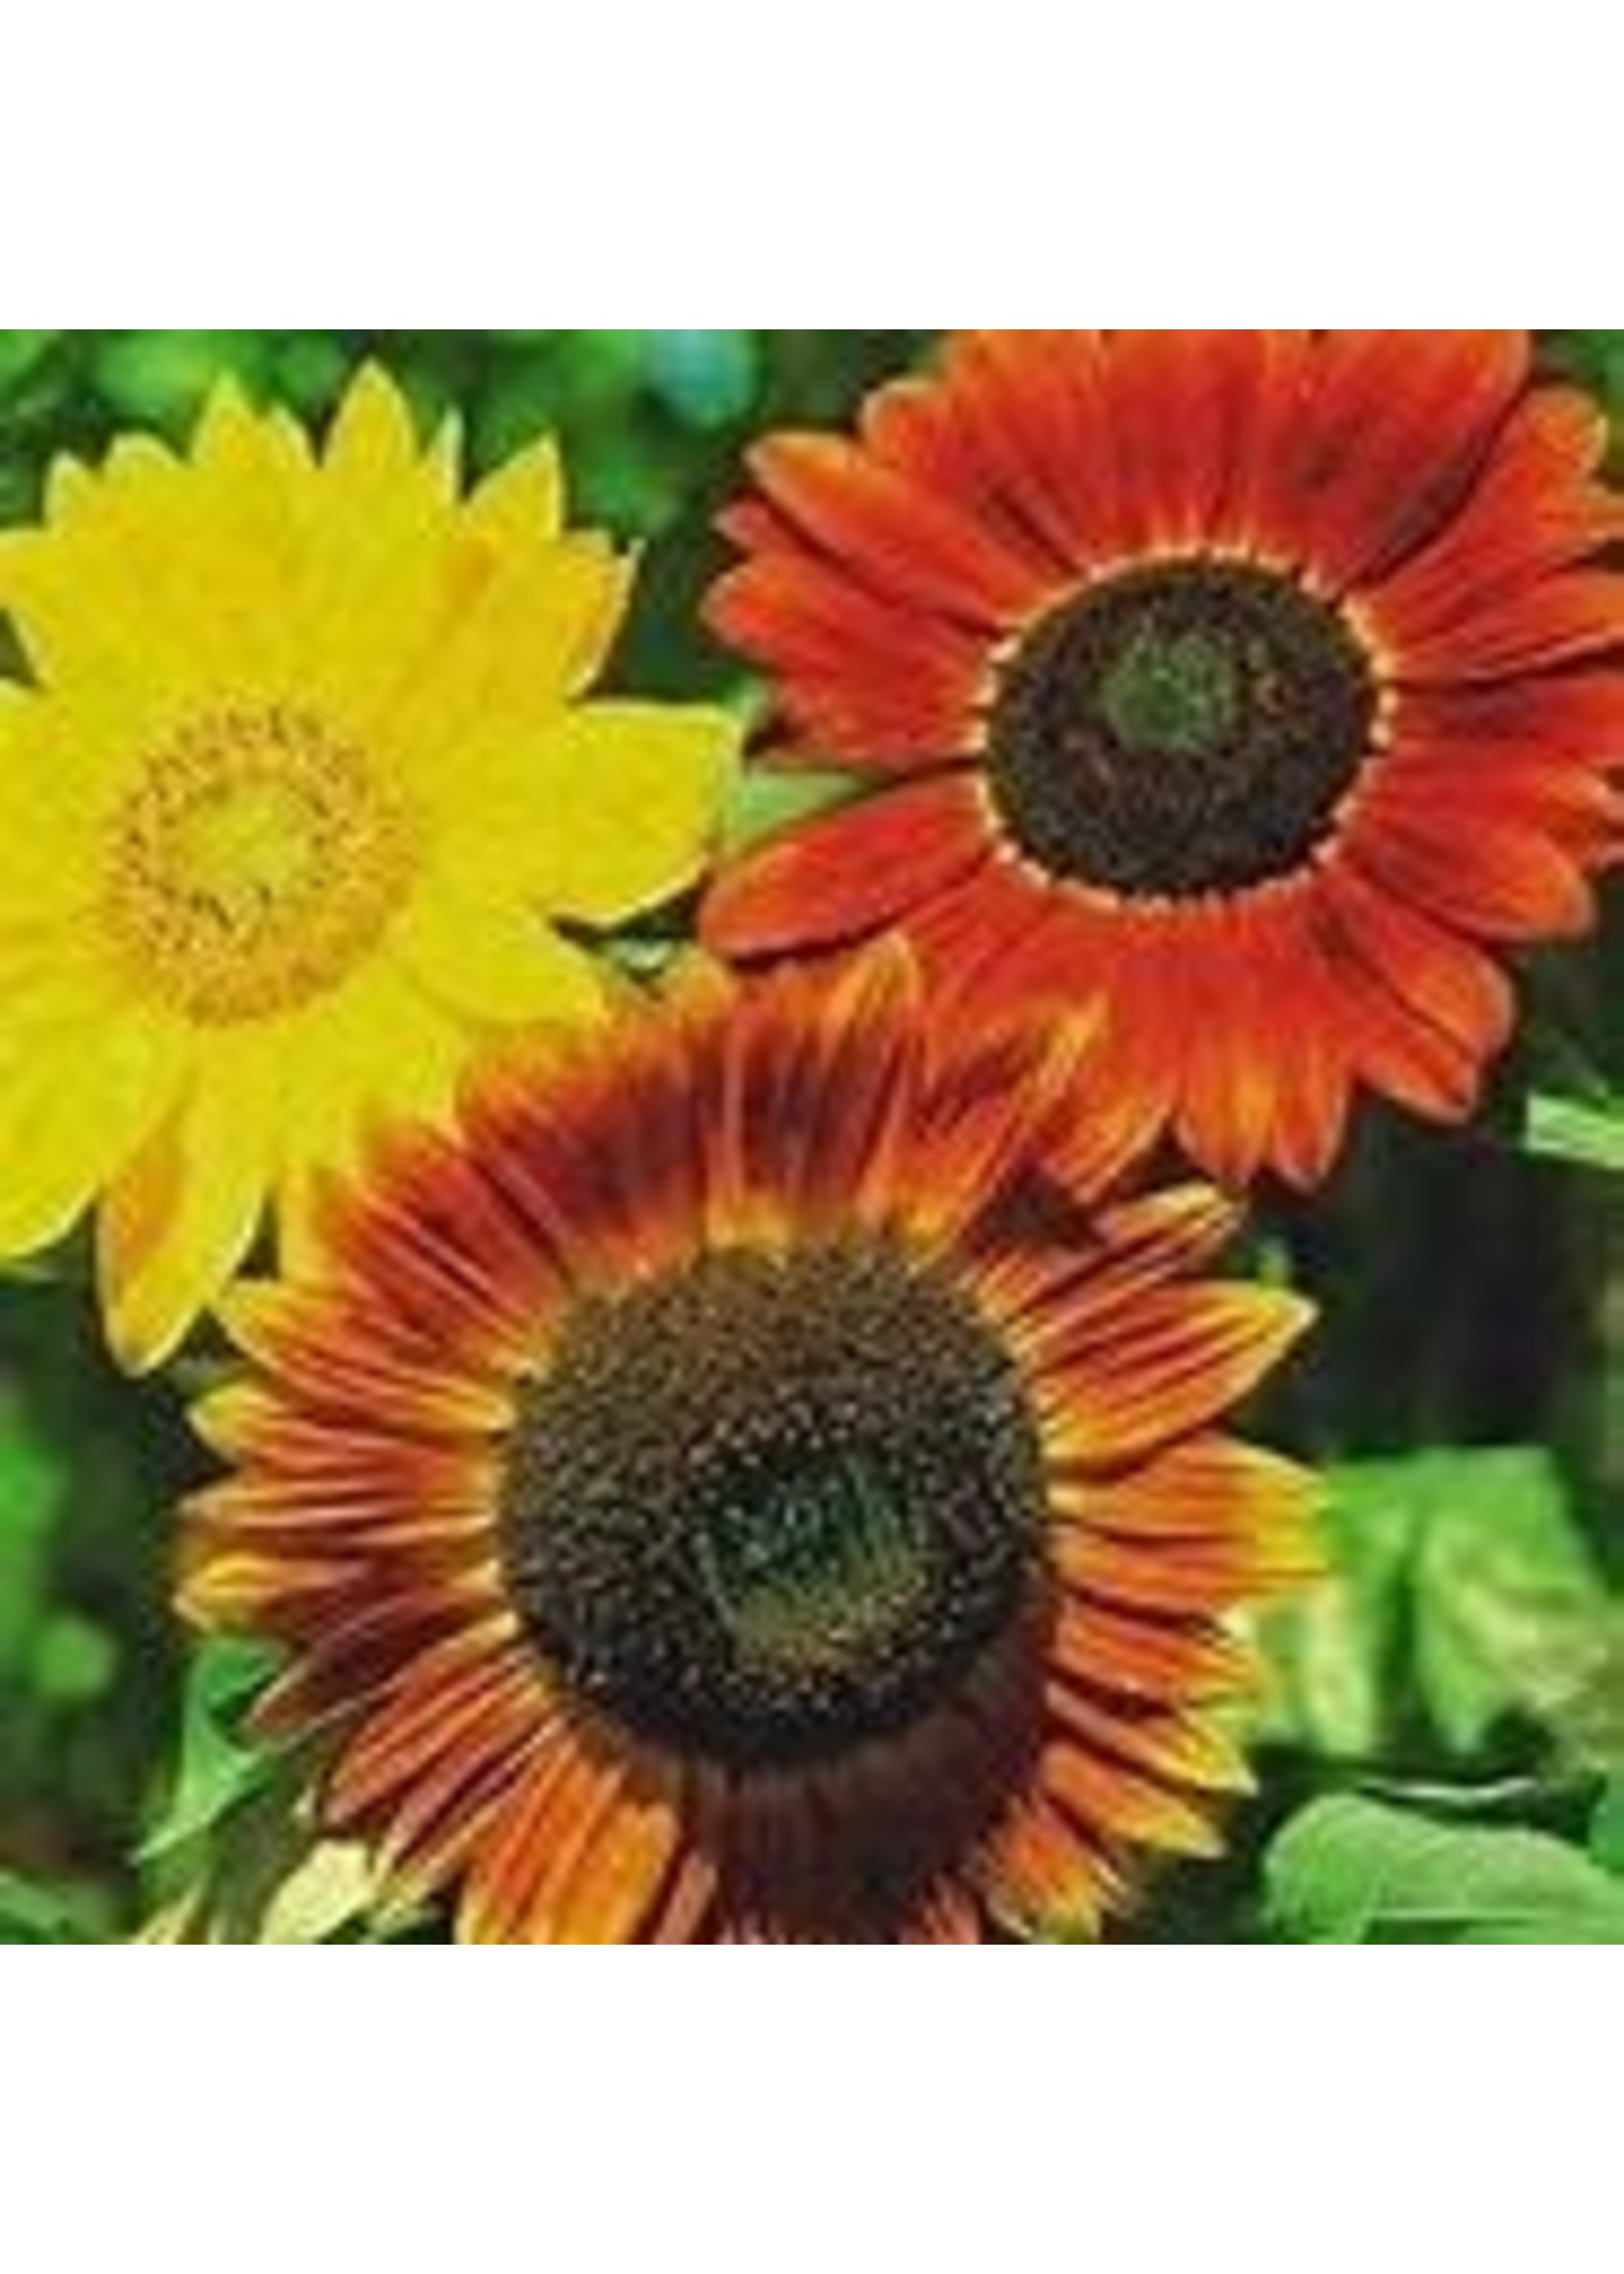 Heirloom Seeds(BIRRI) Sunflowers – Indian Blanket